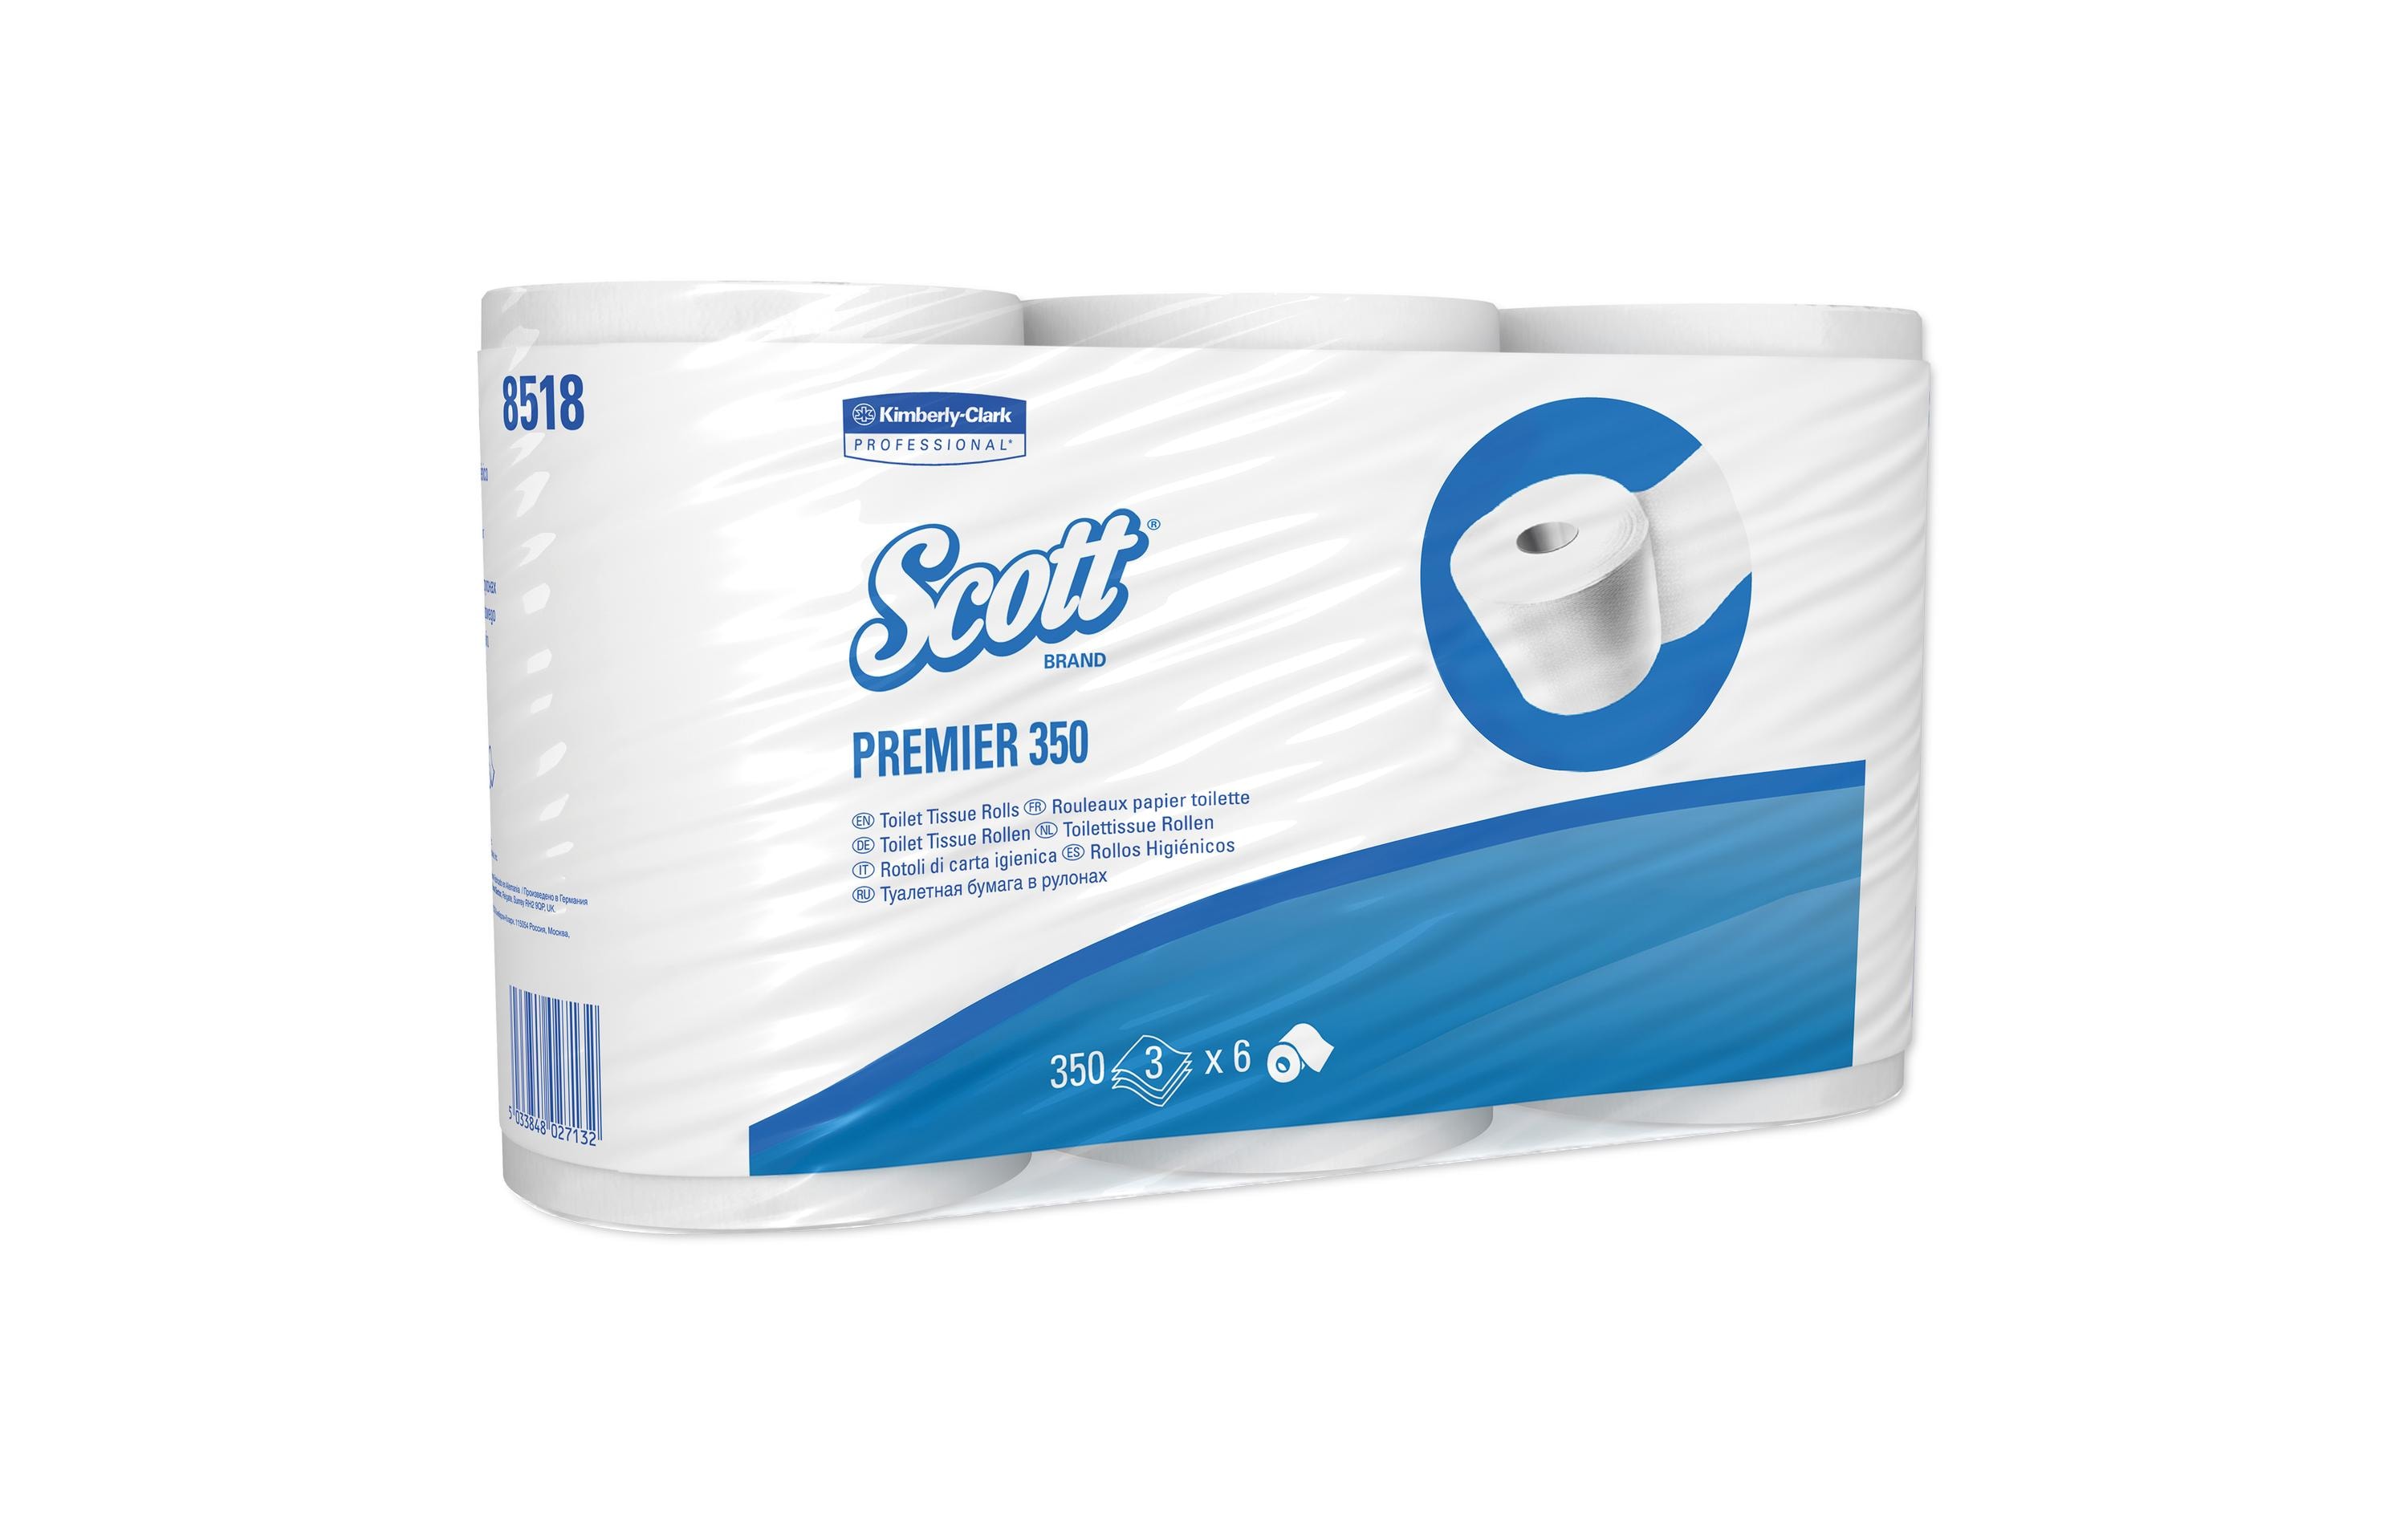 KIMBERLY-CLARK Toilettenpapier Scott Premier 350 36 Rollen